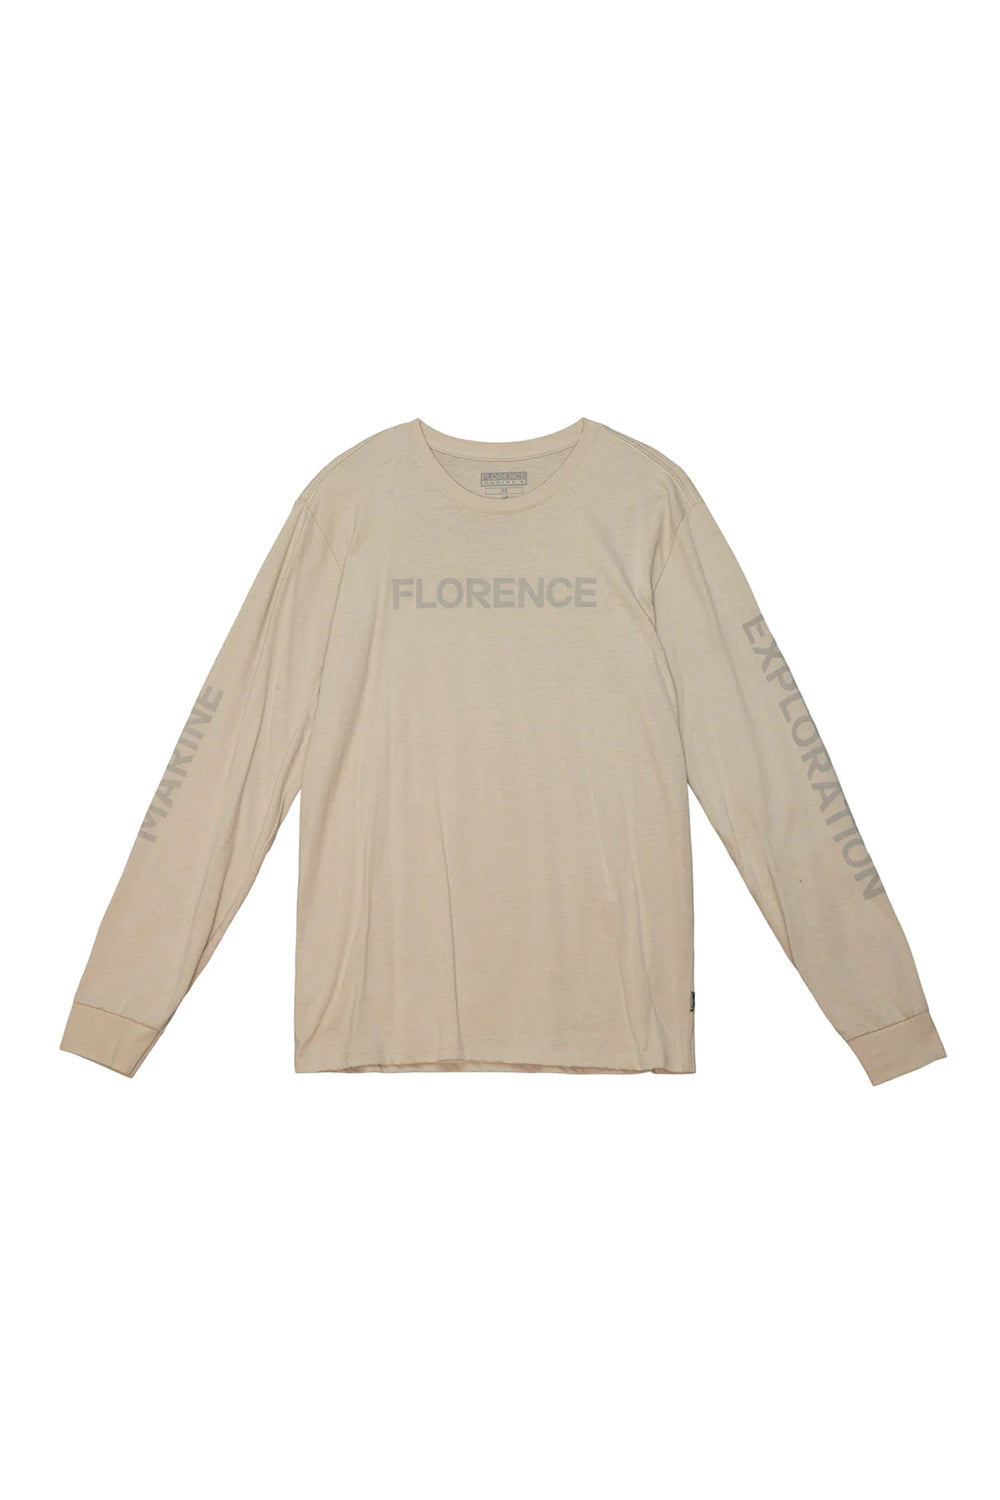 Florence Marine X Echo Organic Long Sleeve T-Shirt